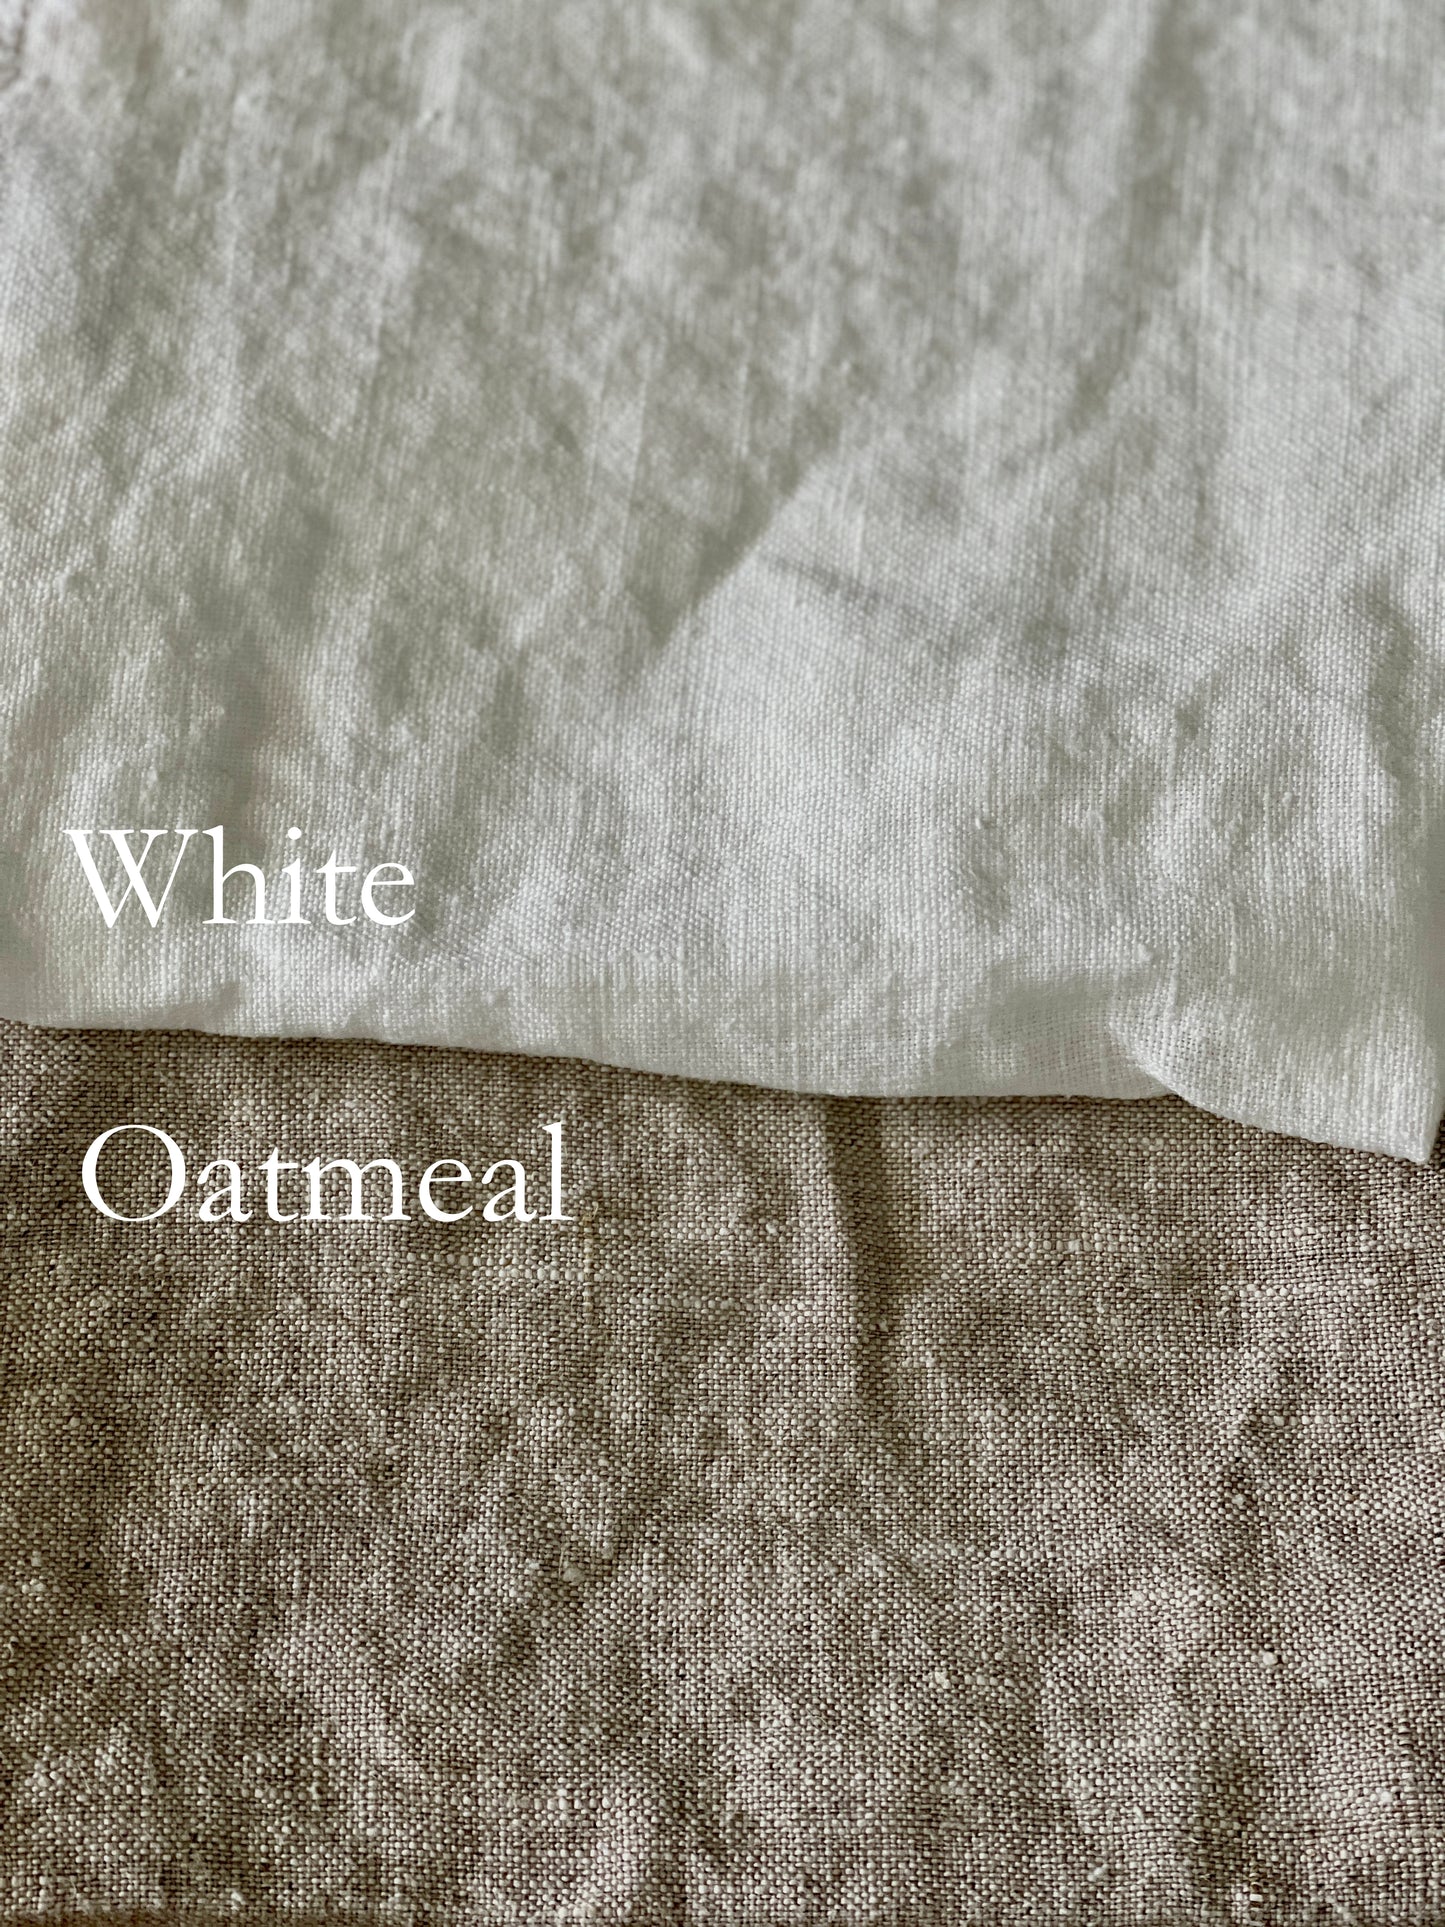 Pure Linen Tea towel- Wattle Edition